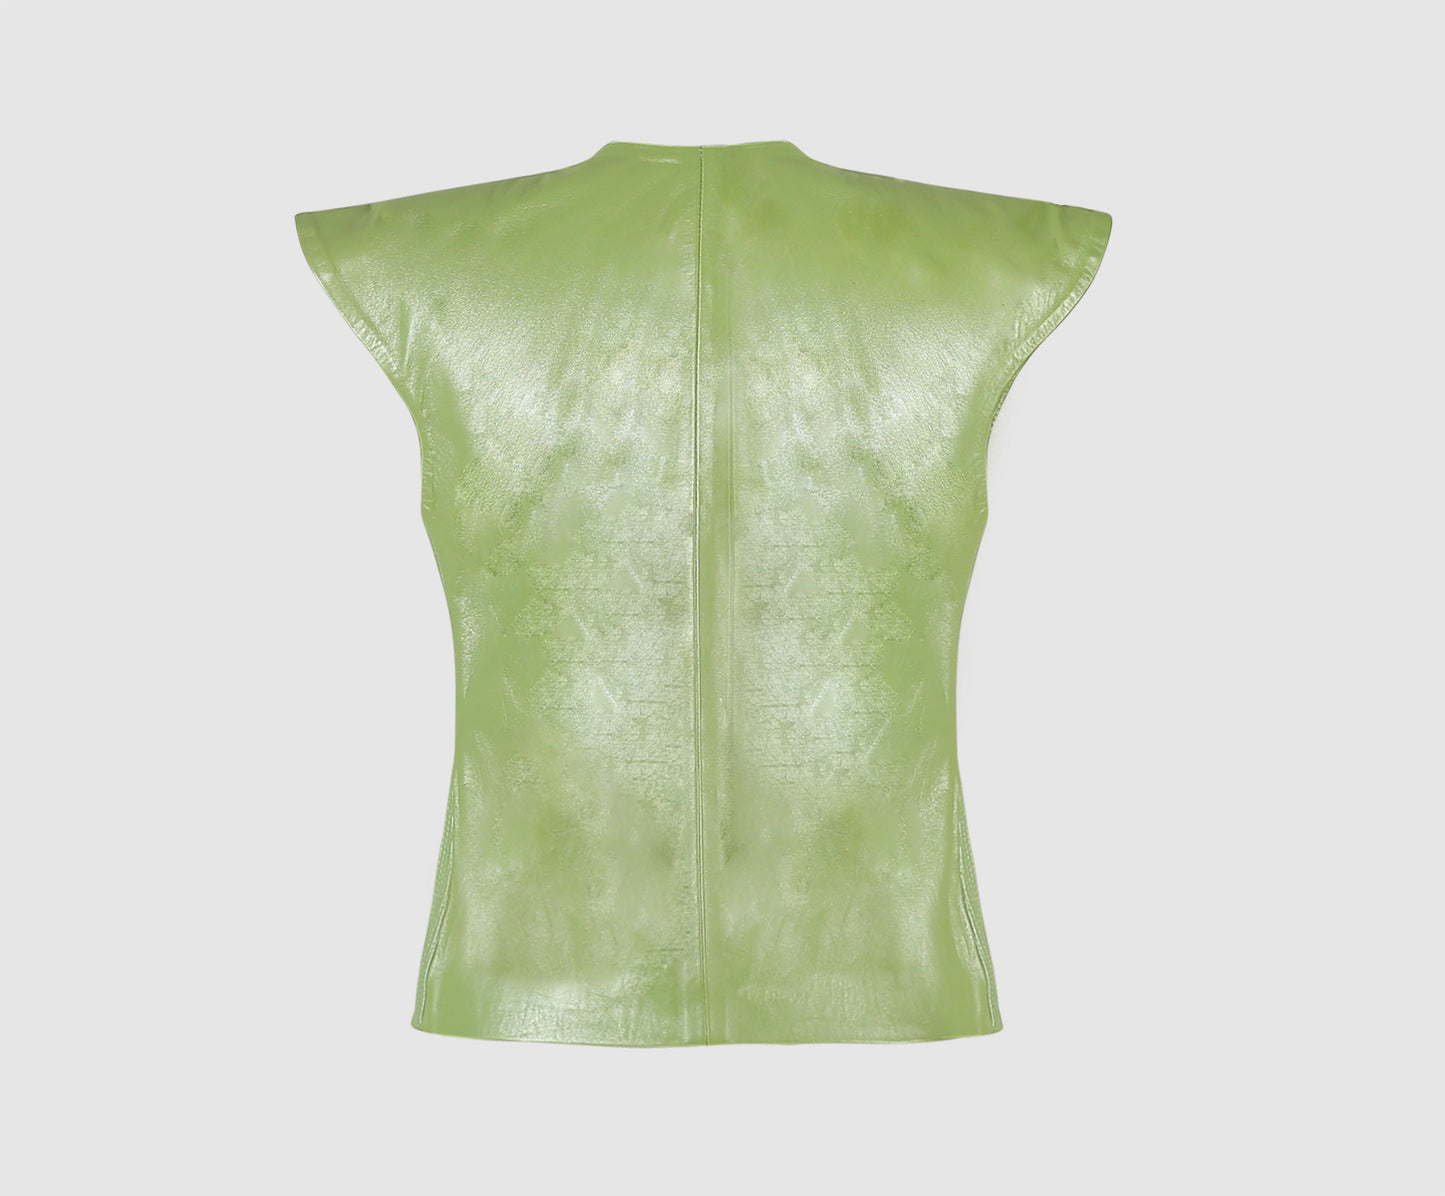 Ausborn Leather Vest Electric Lime Green